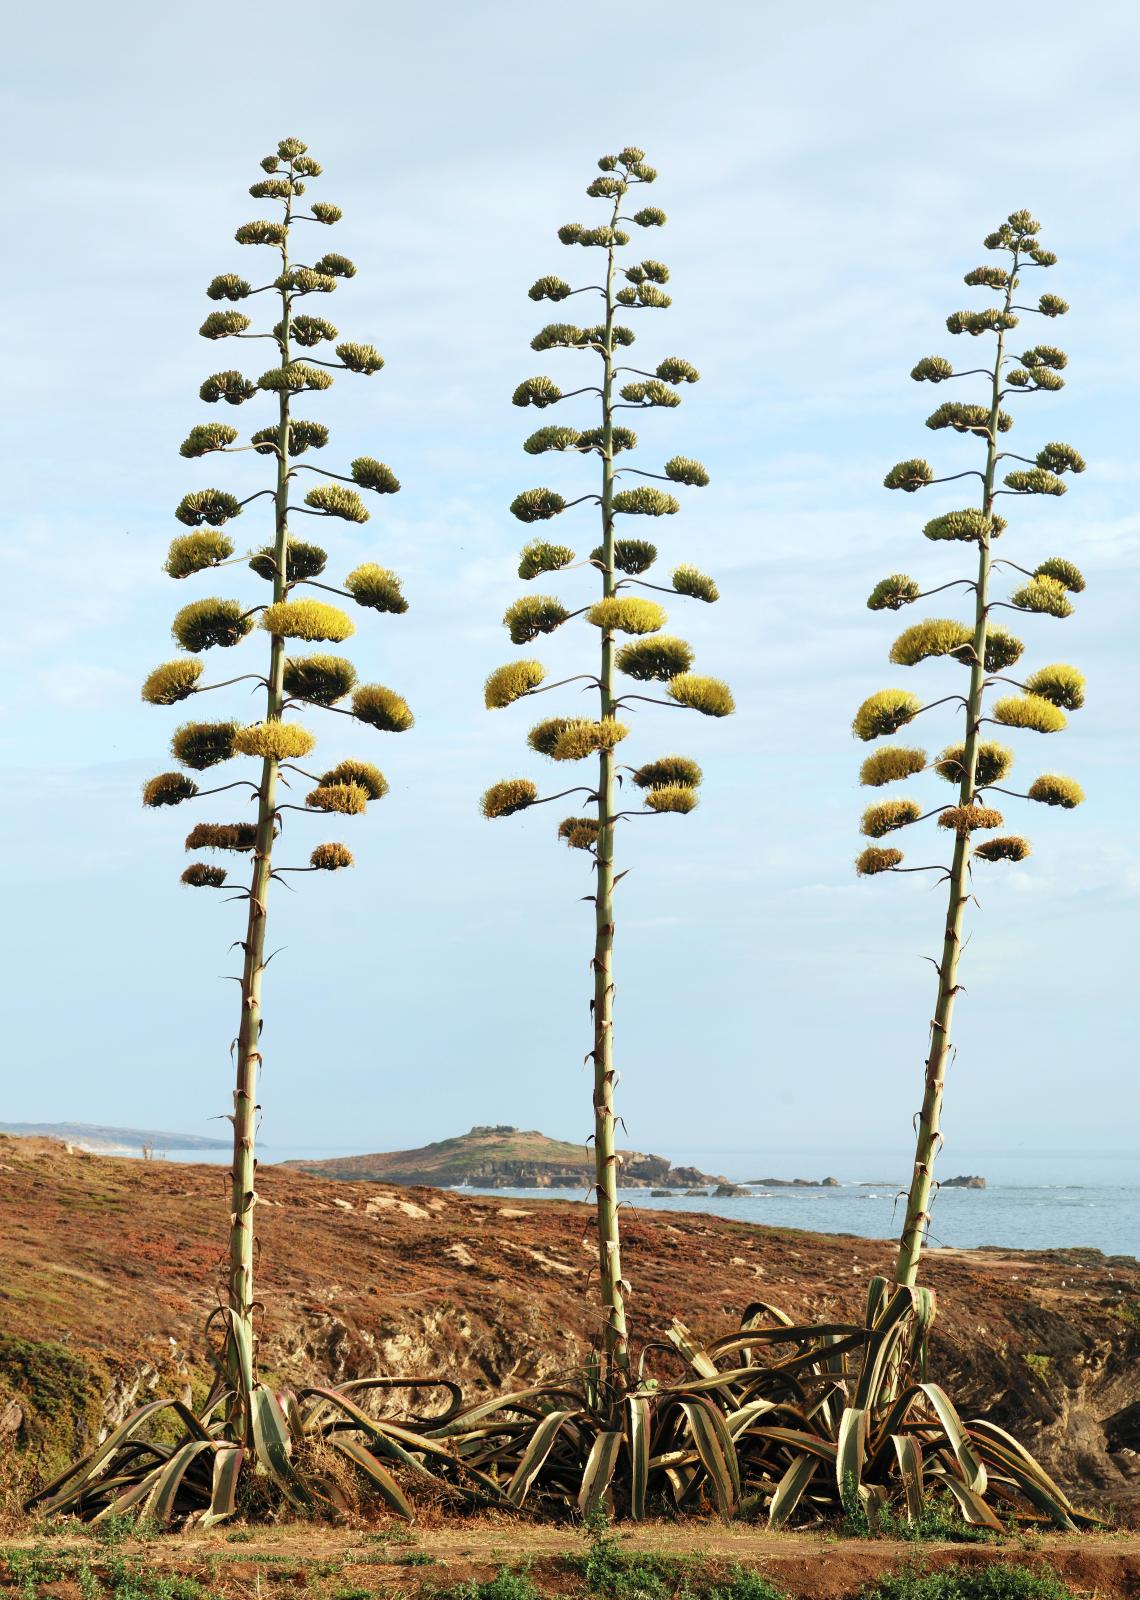 century plant (agave americana), in bloom | feedipedia